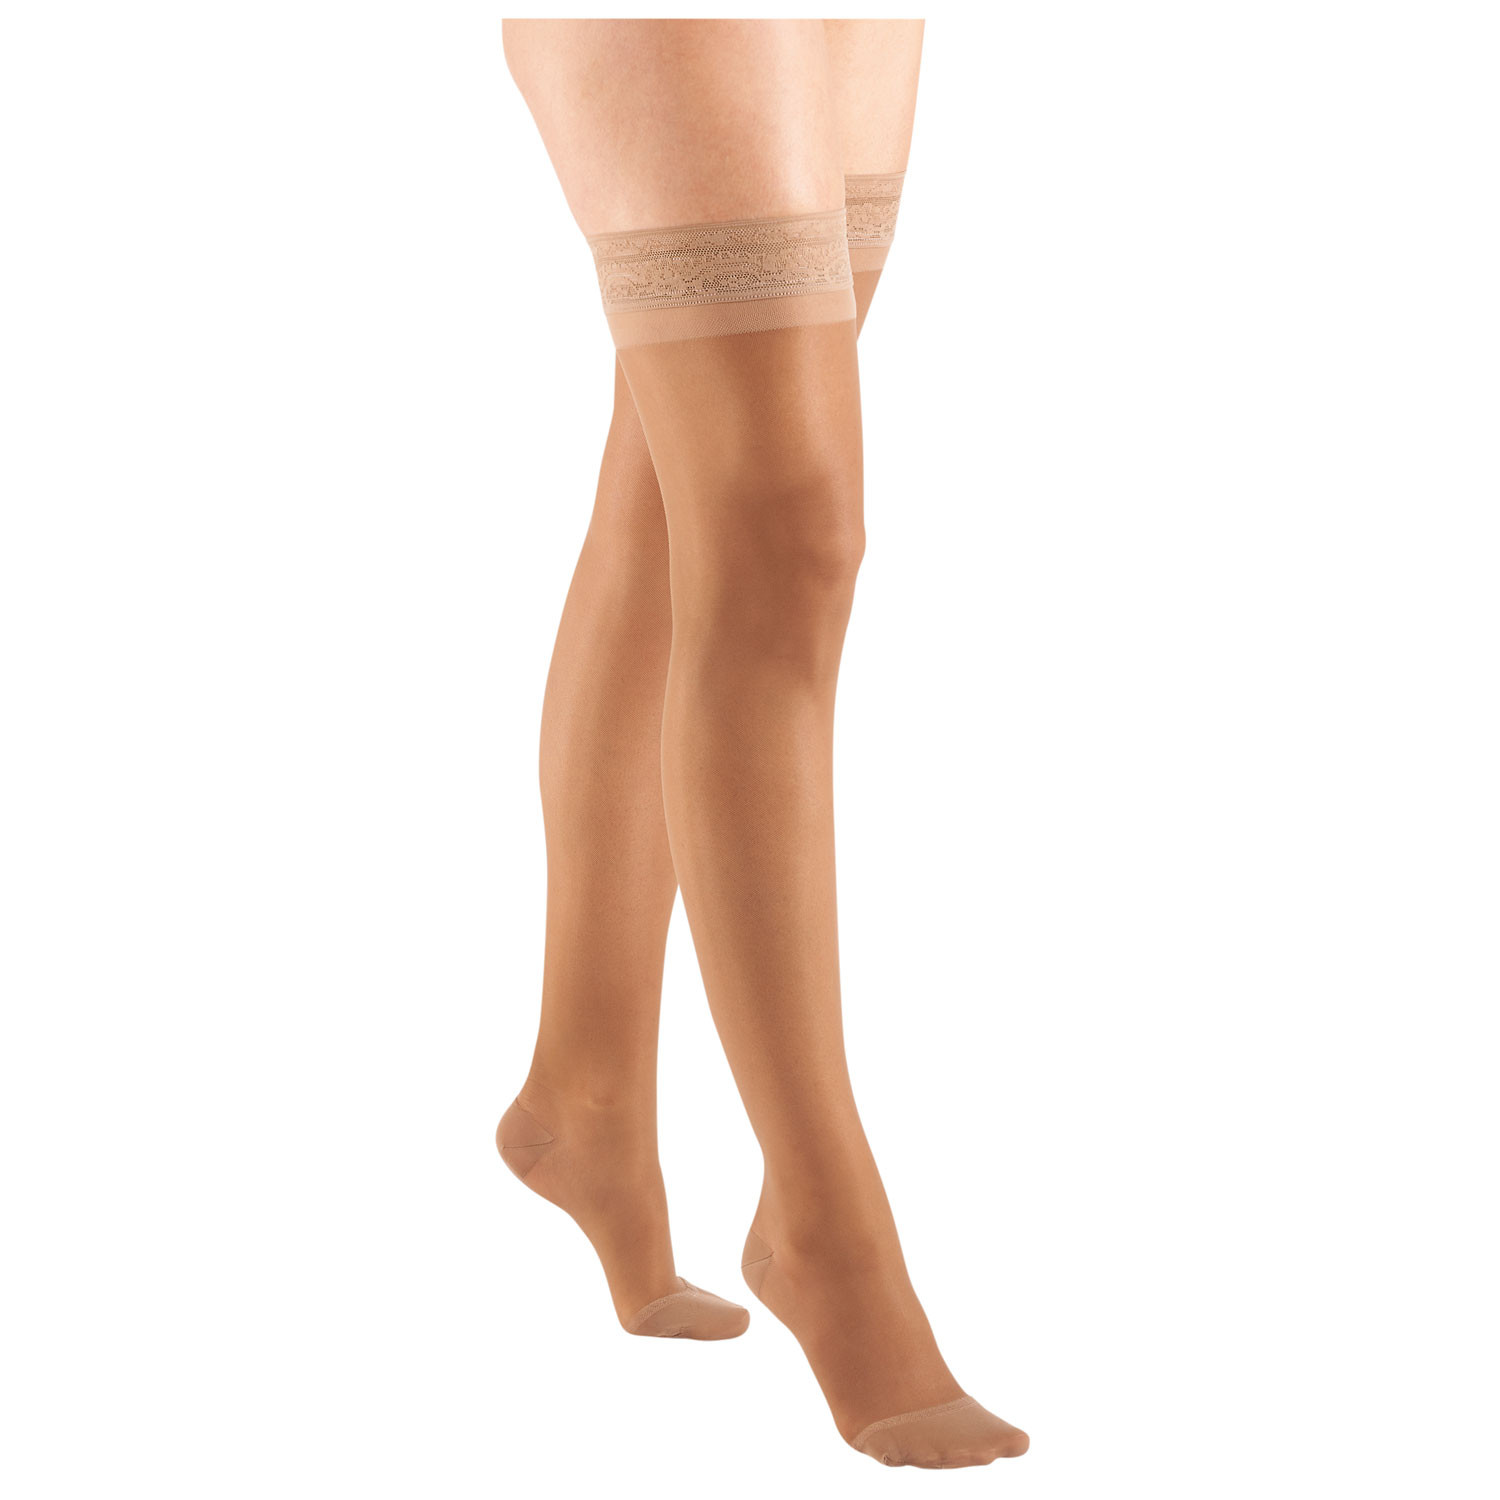 compression stockings for men size medium